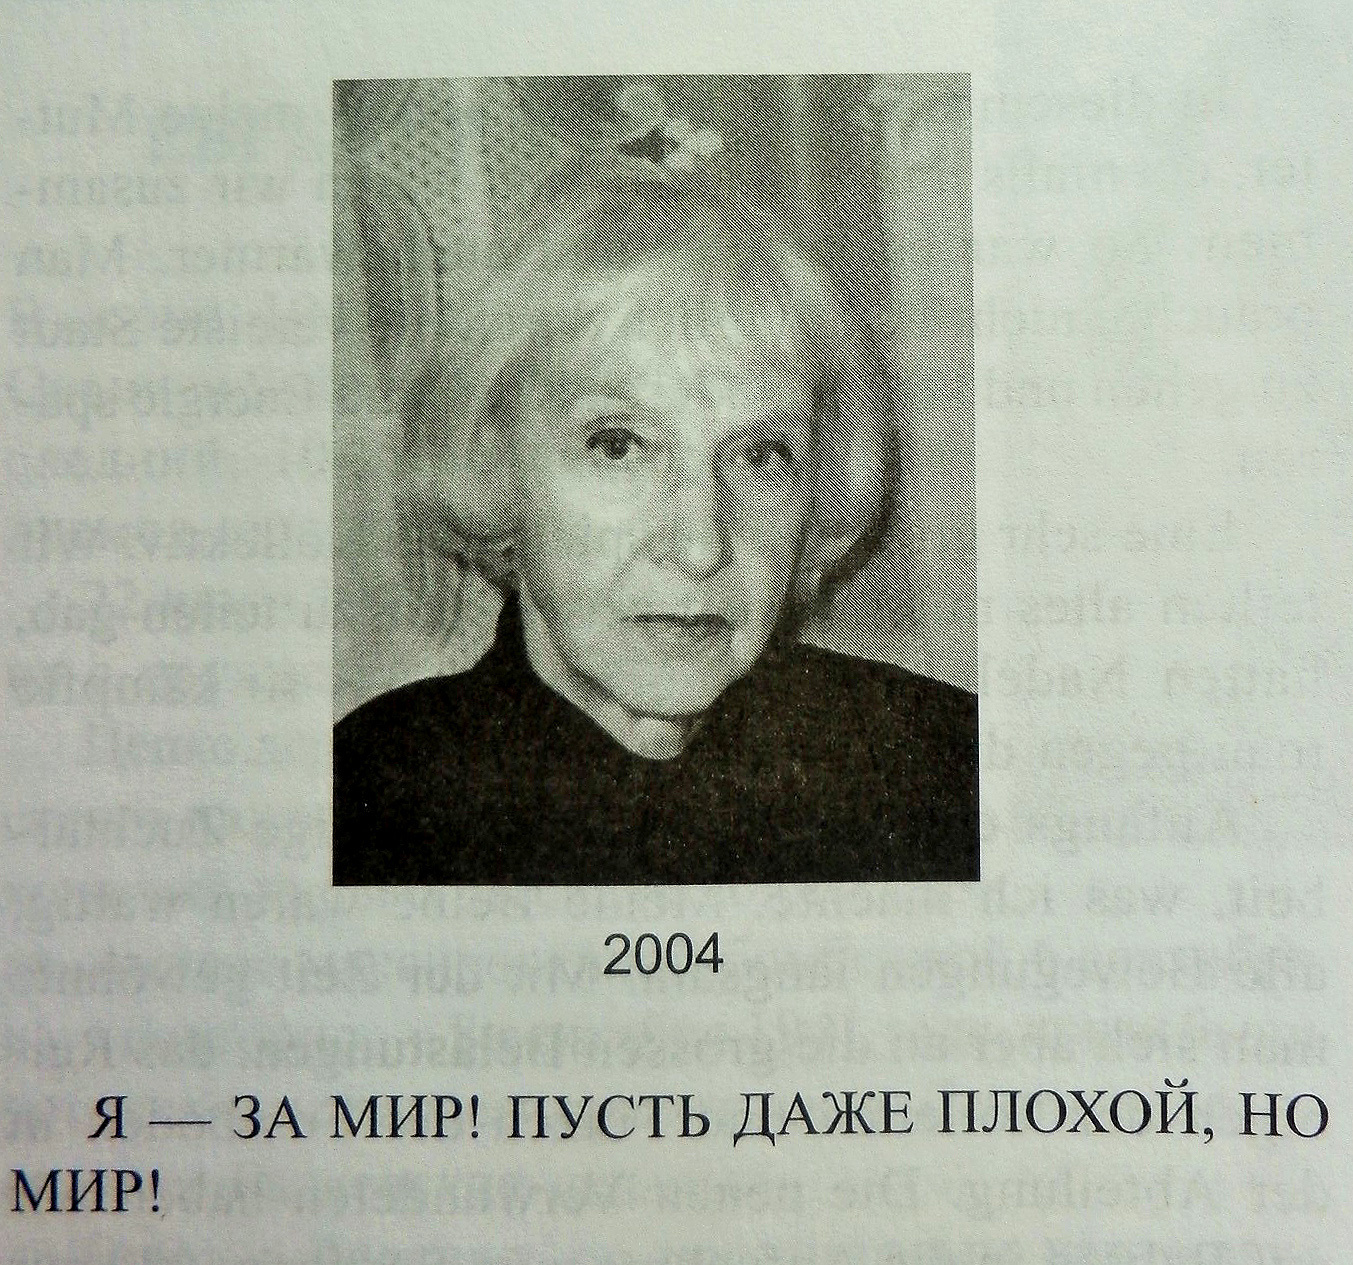 Евгения Рудник, фото 2004 года